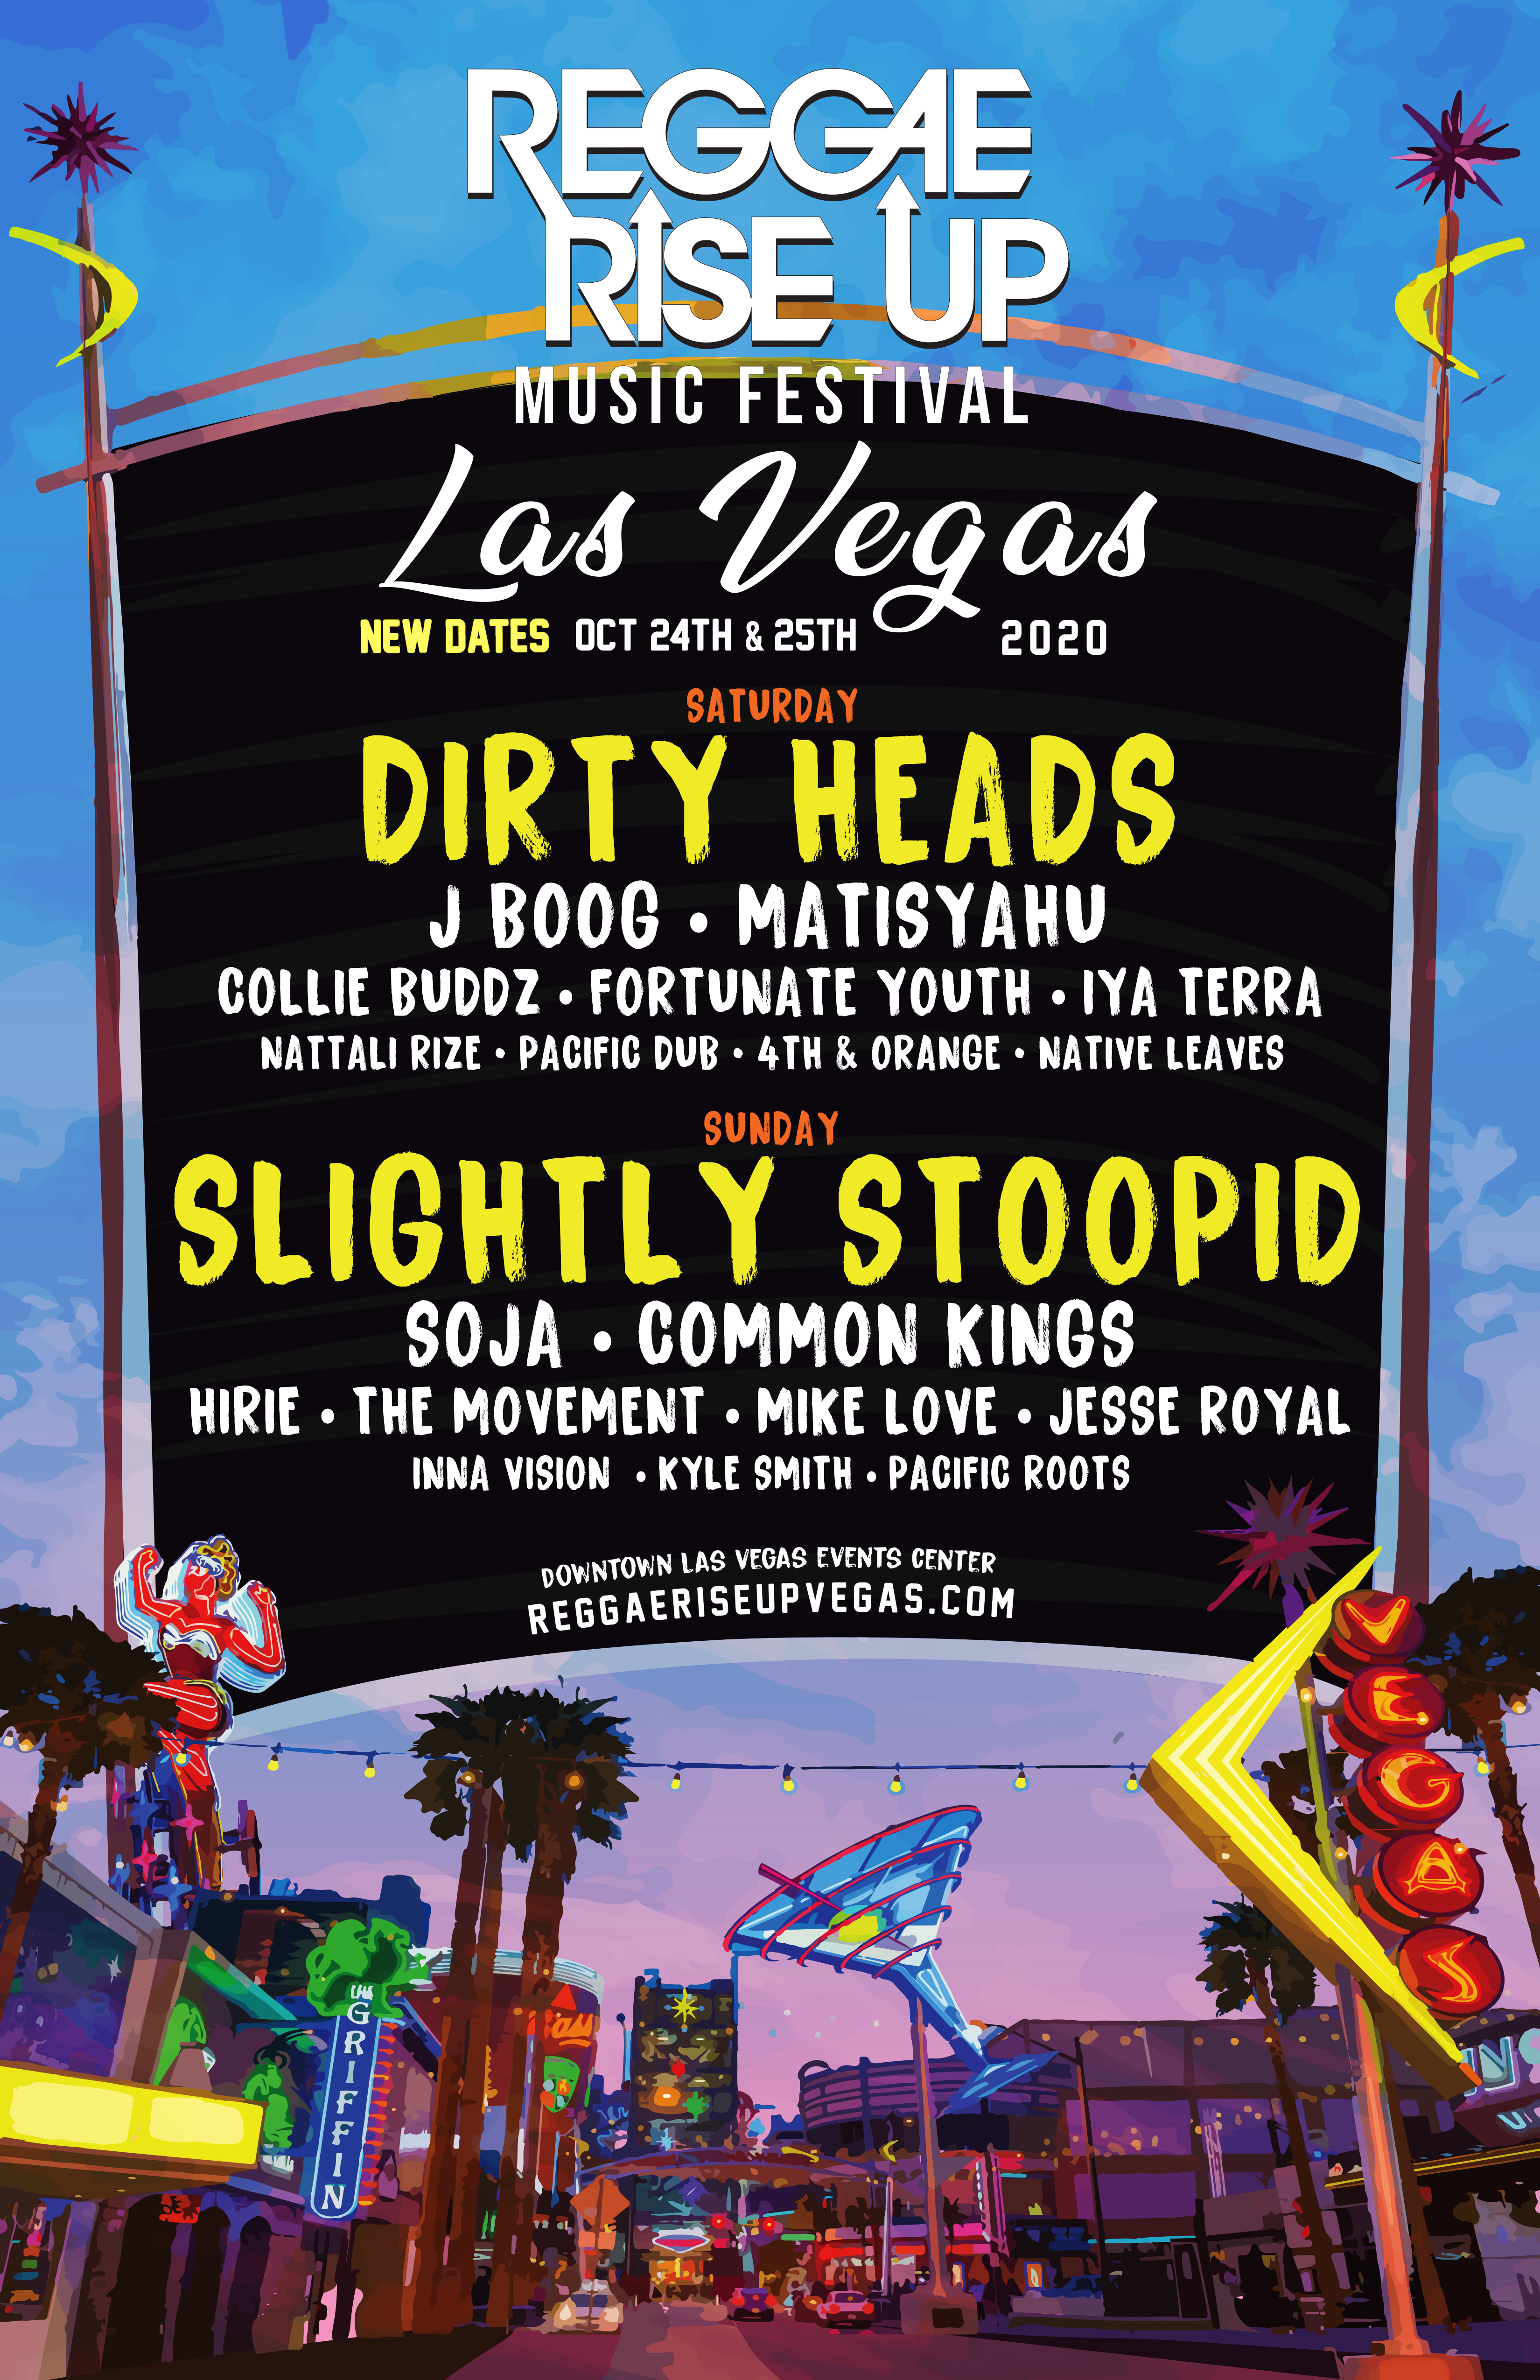 Reggae Rise Up Announces New Dates  & Lineup Adjustments for 2020 Vegas Festival